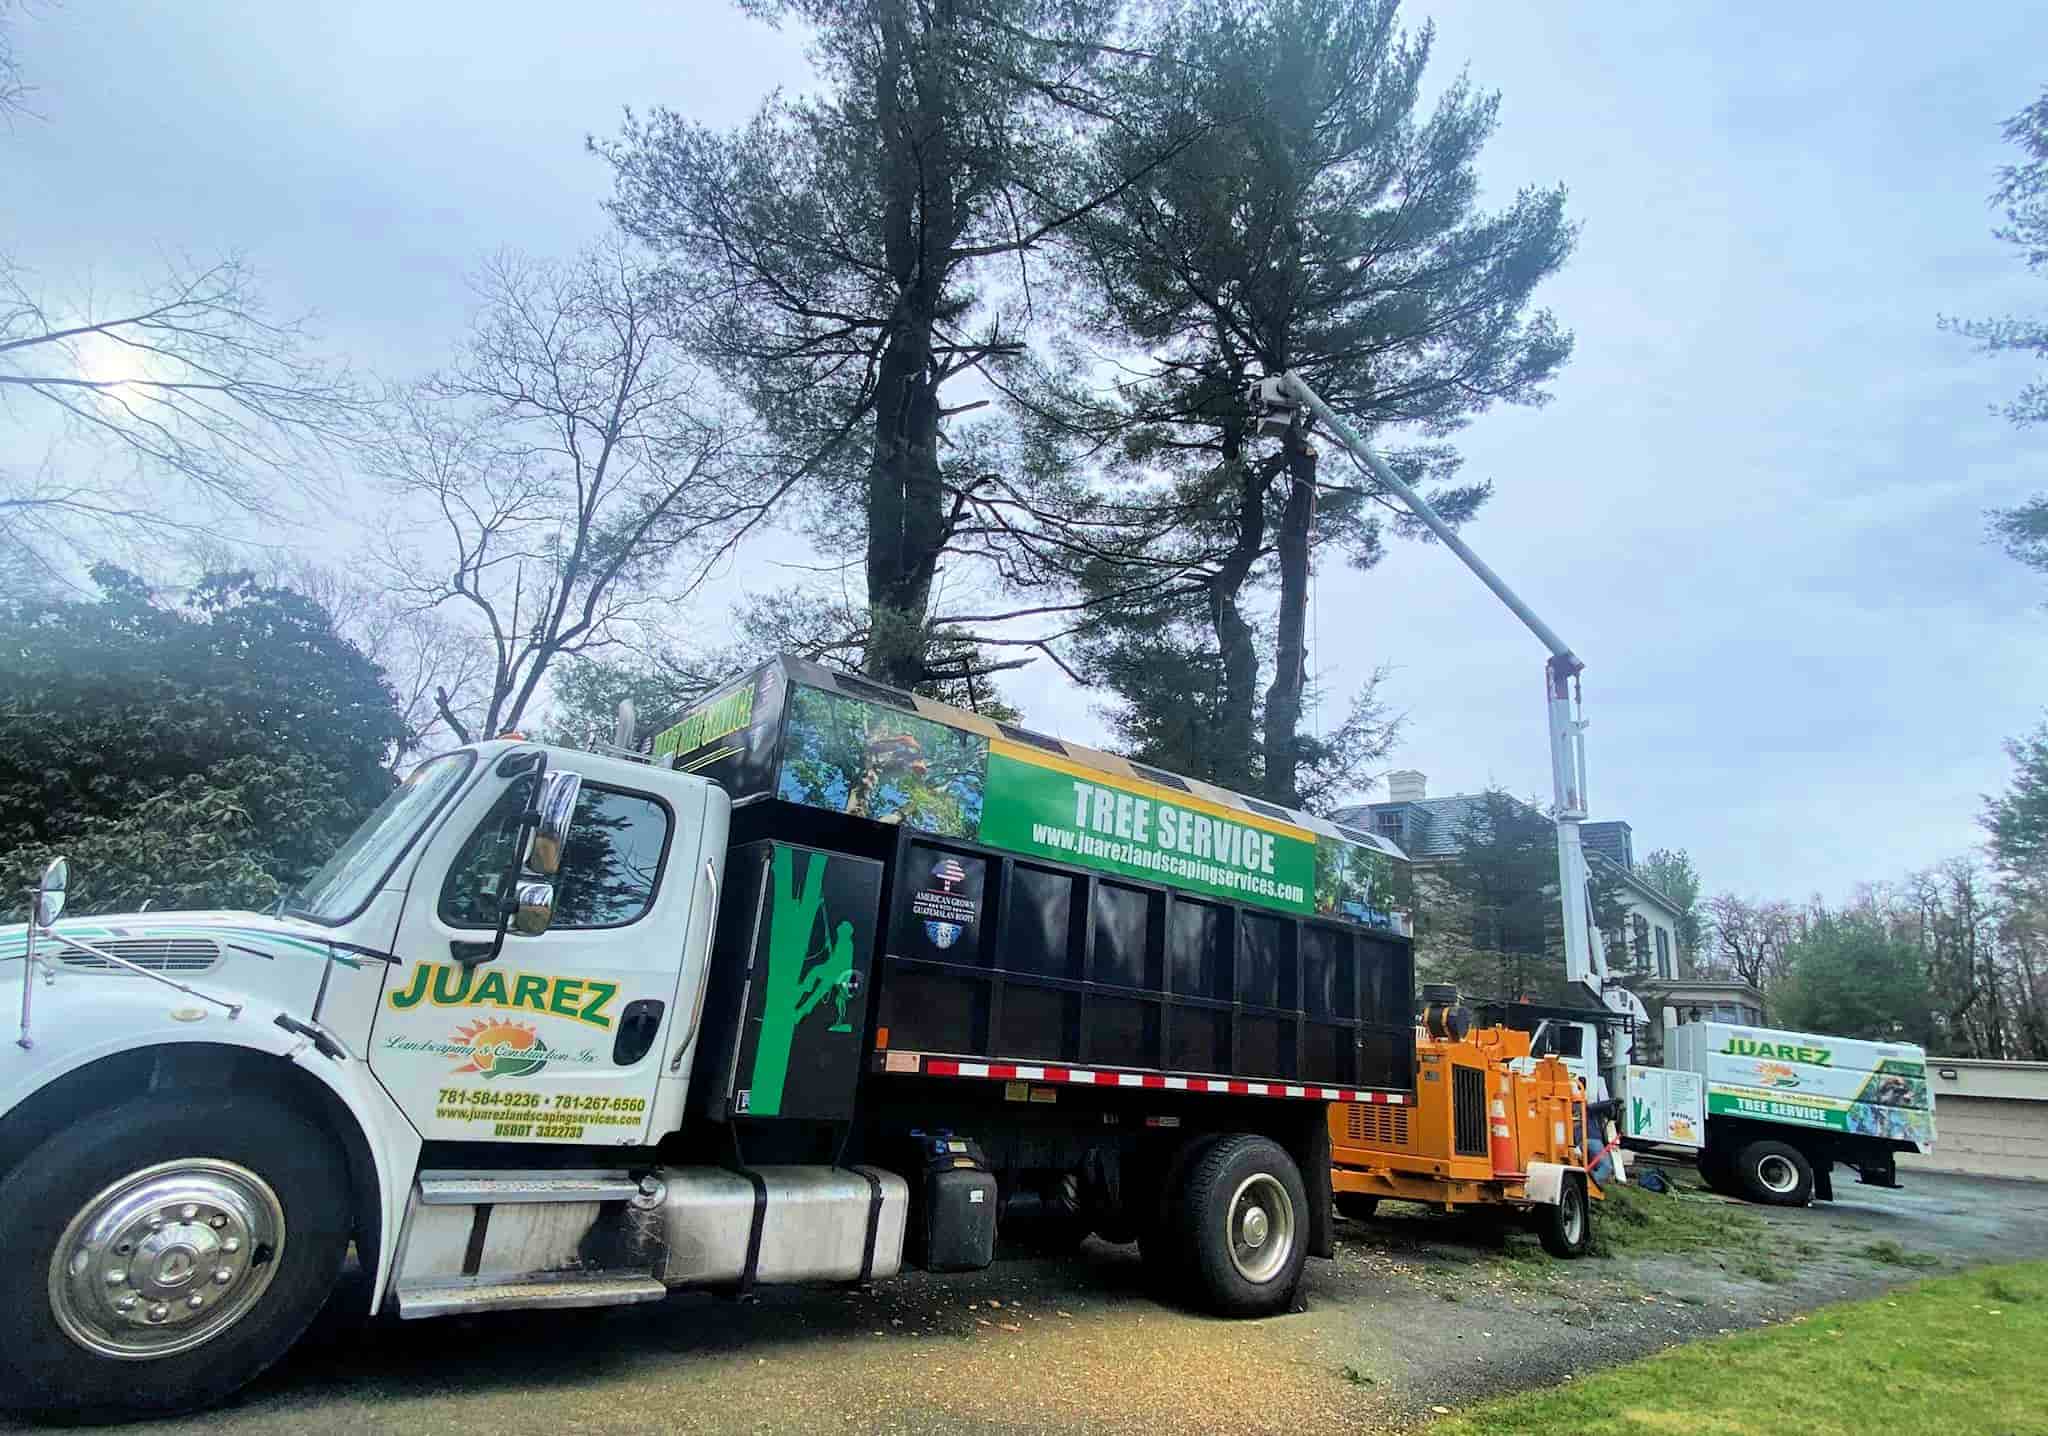 Tree Removal service